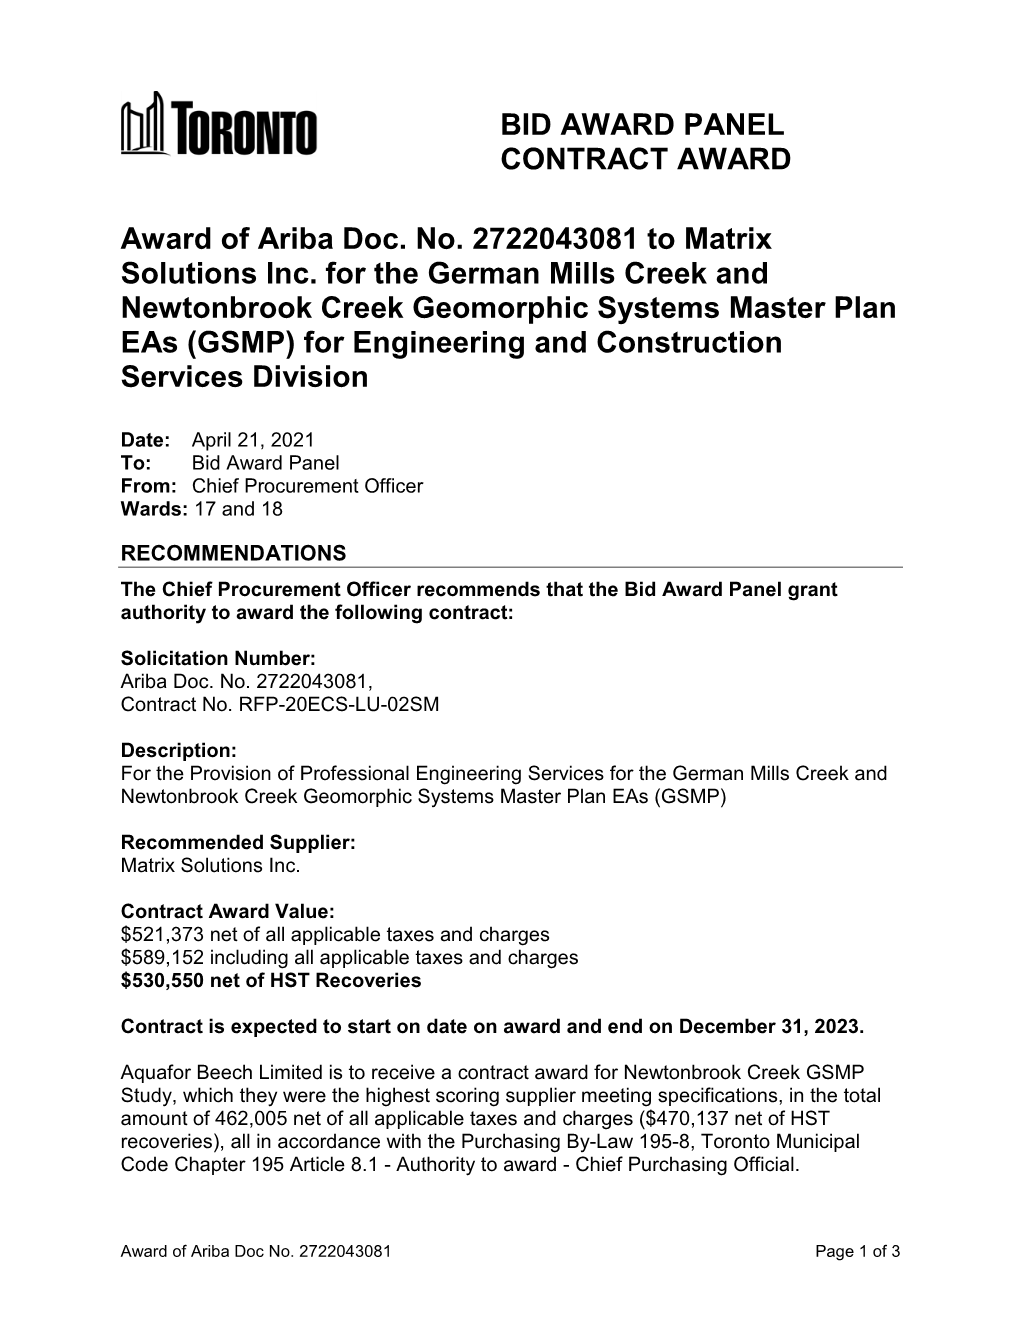 Award of Ariba Doc. No. 2722043081 to Matrix Solutions Inc. for The